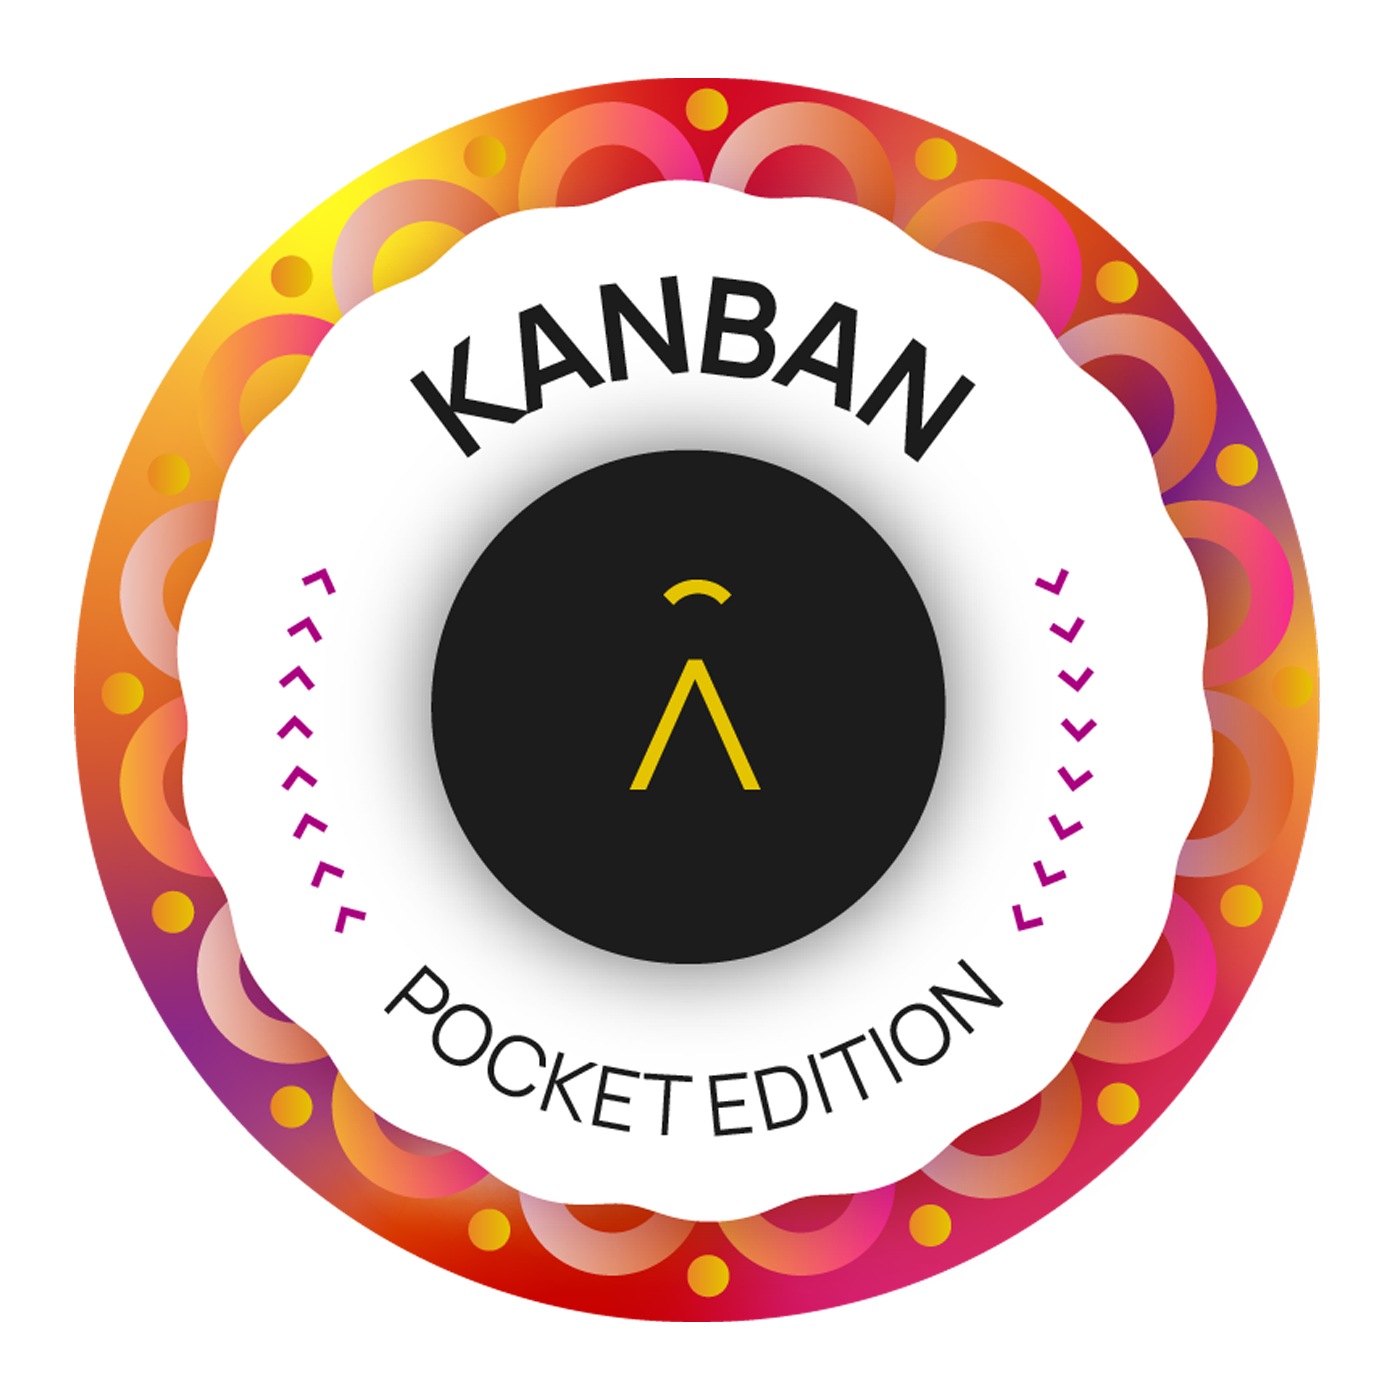 Kanban Pocket Edition